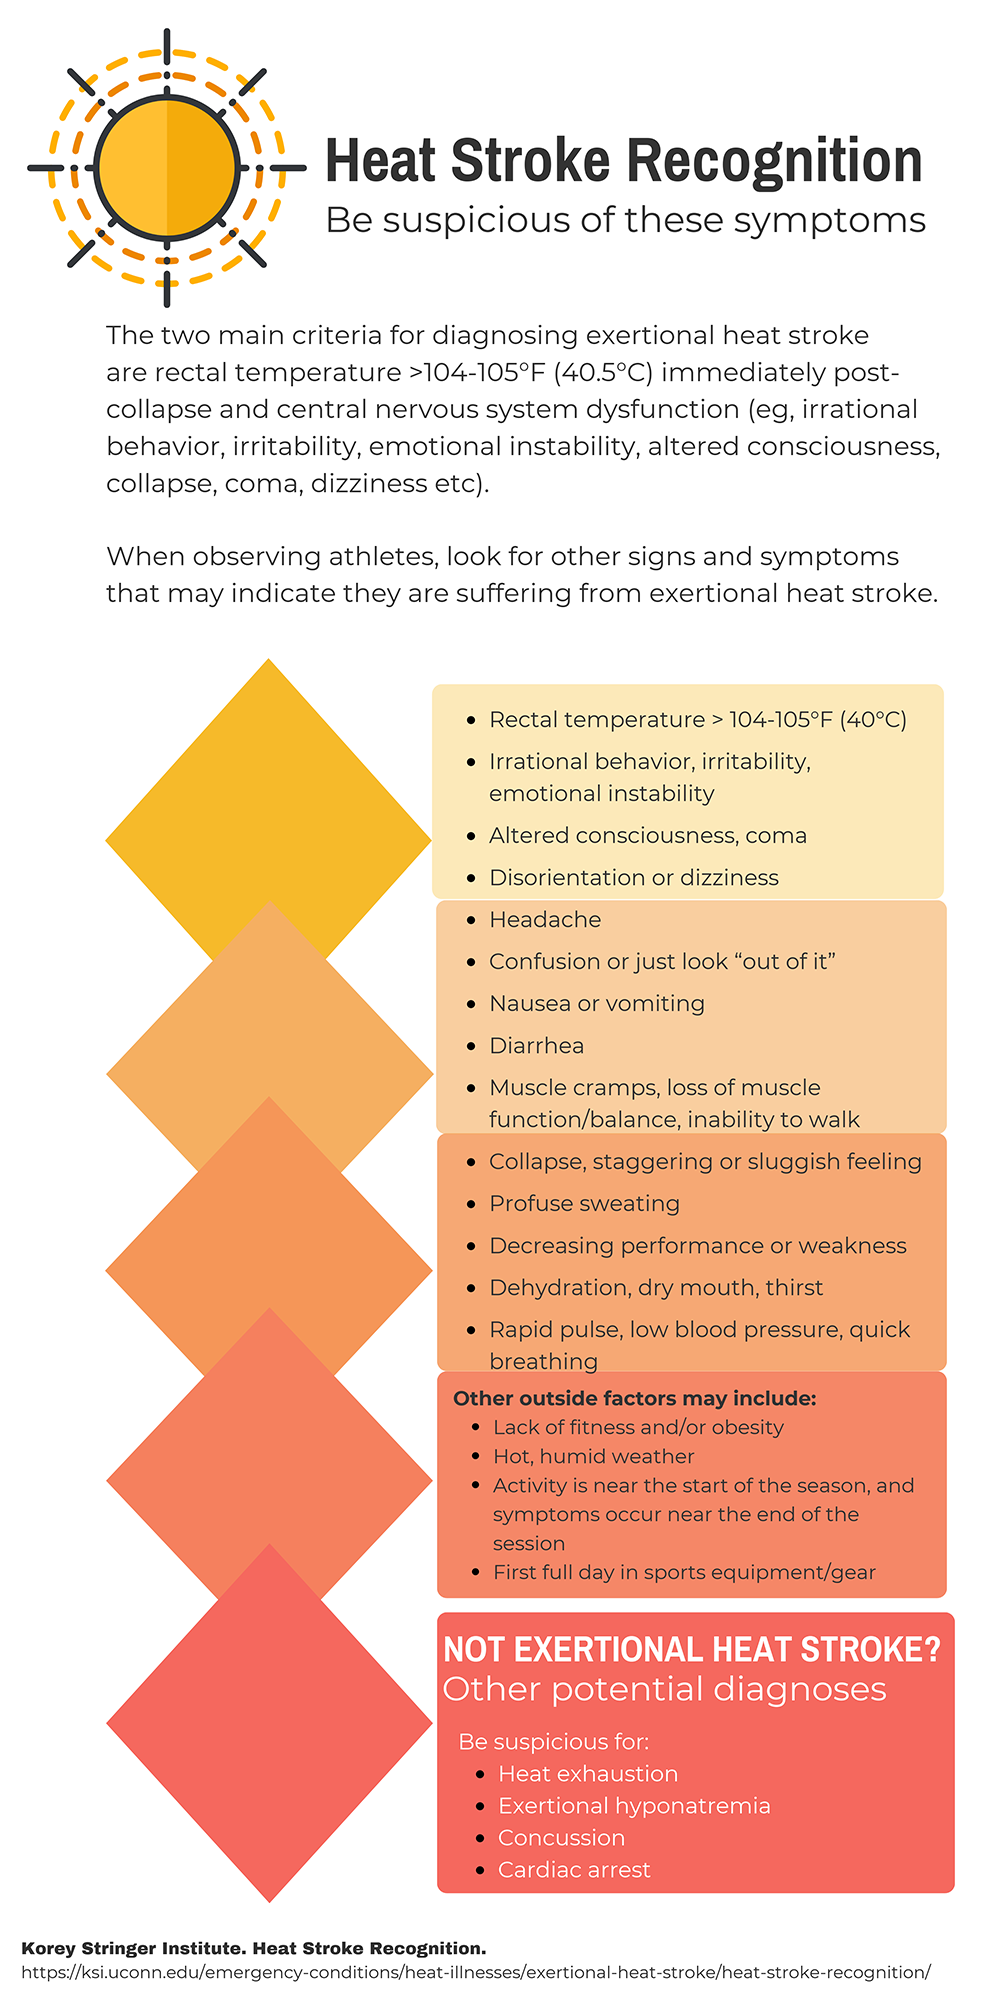 Heat Stroke Recognition: Suspicious Symptoms